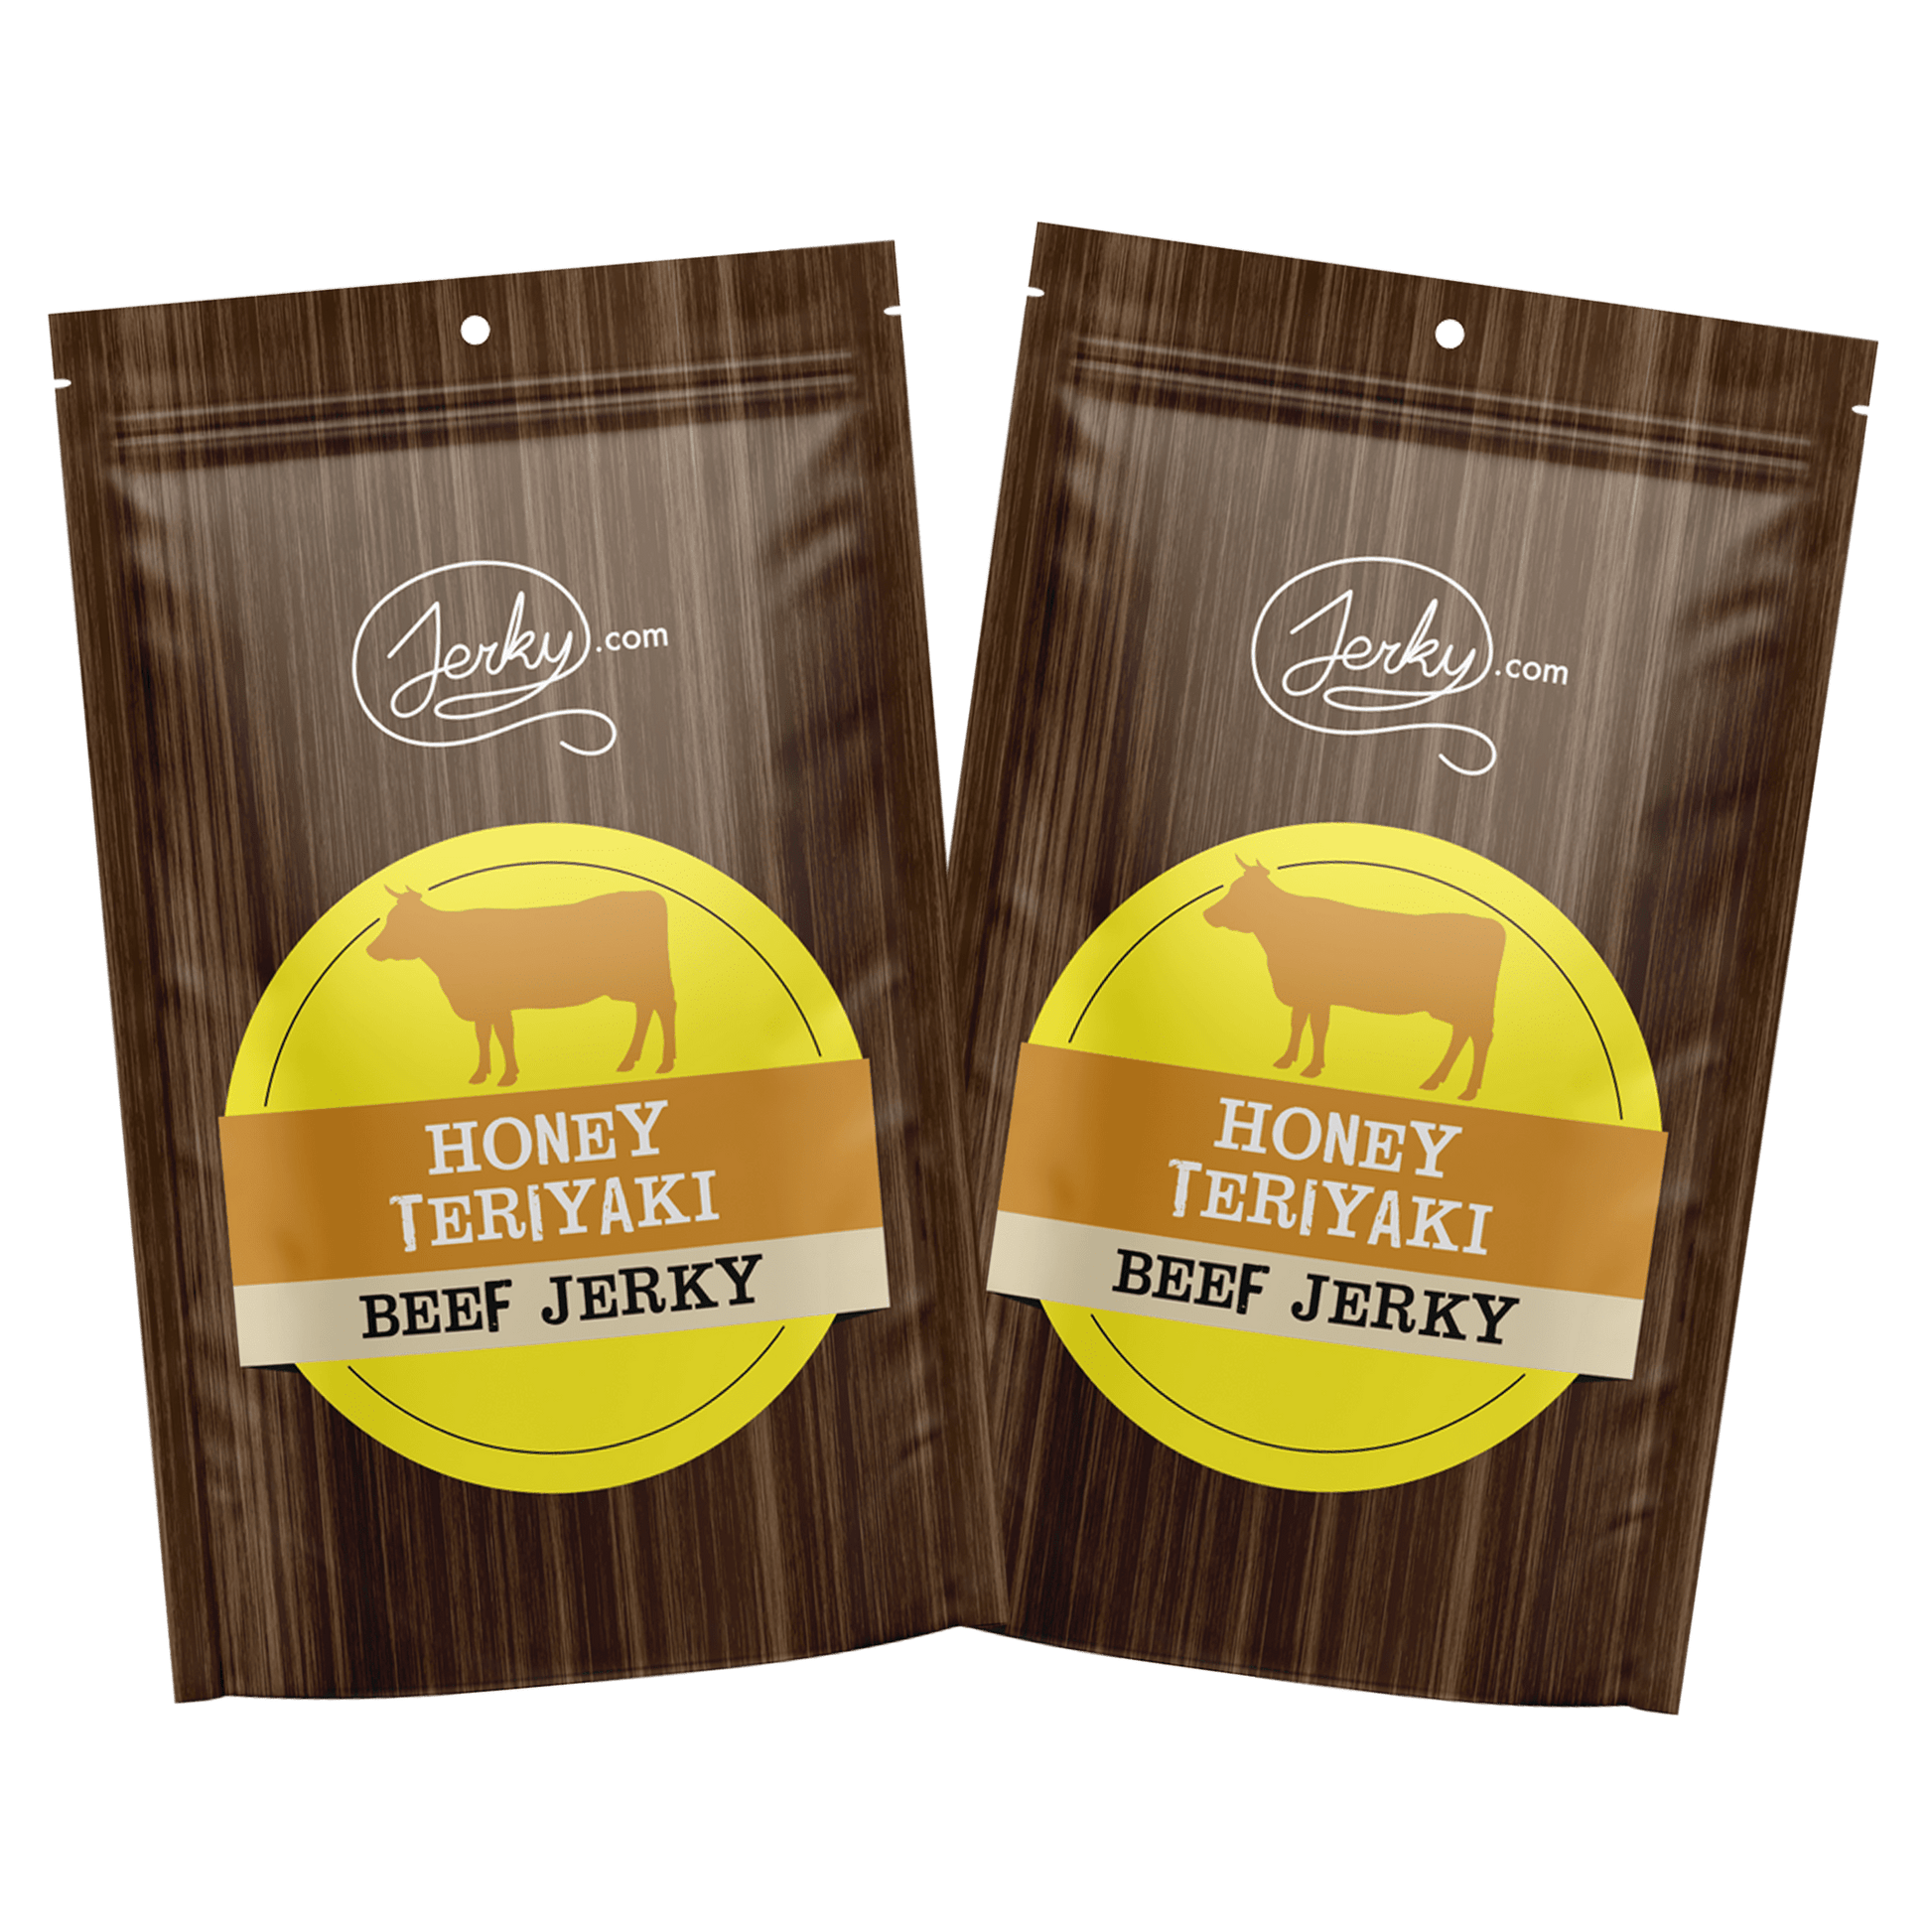 All-Natural Beef Jerky - Honey Teriyaki - 1 Pound Bag by Jerky.com